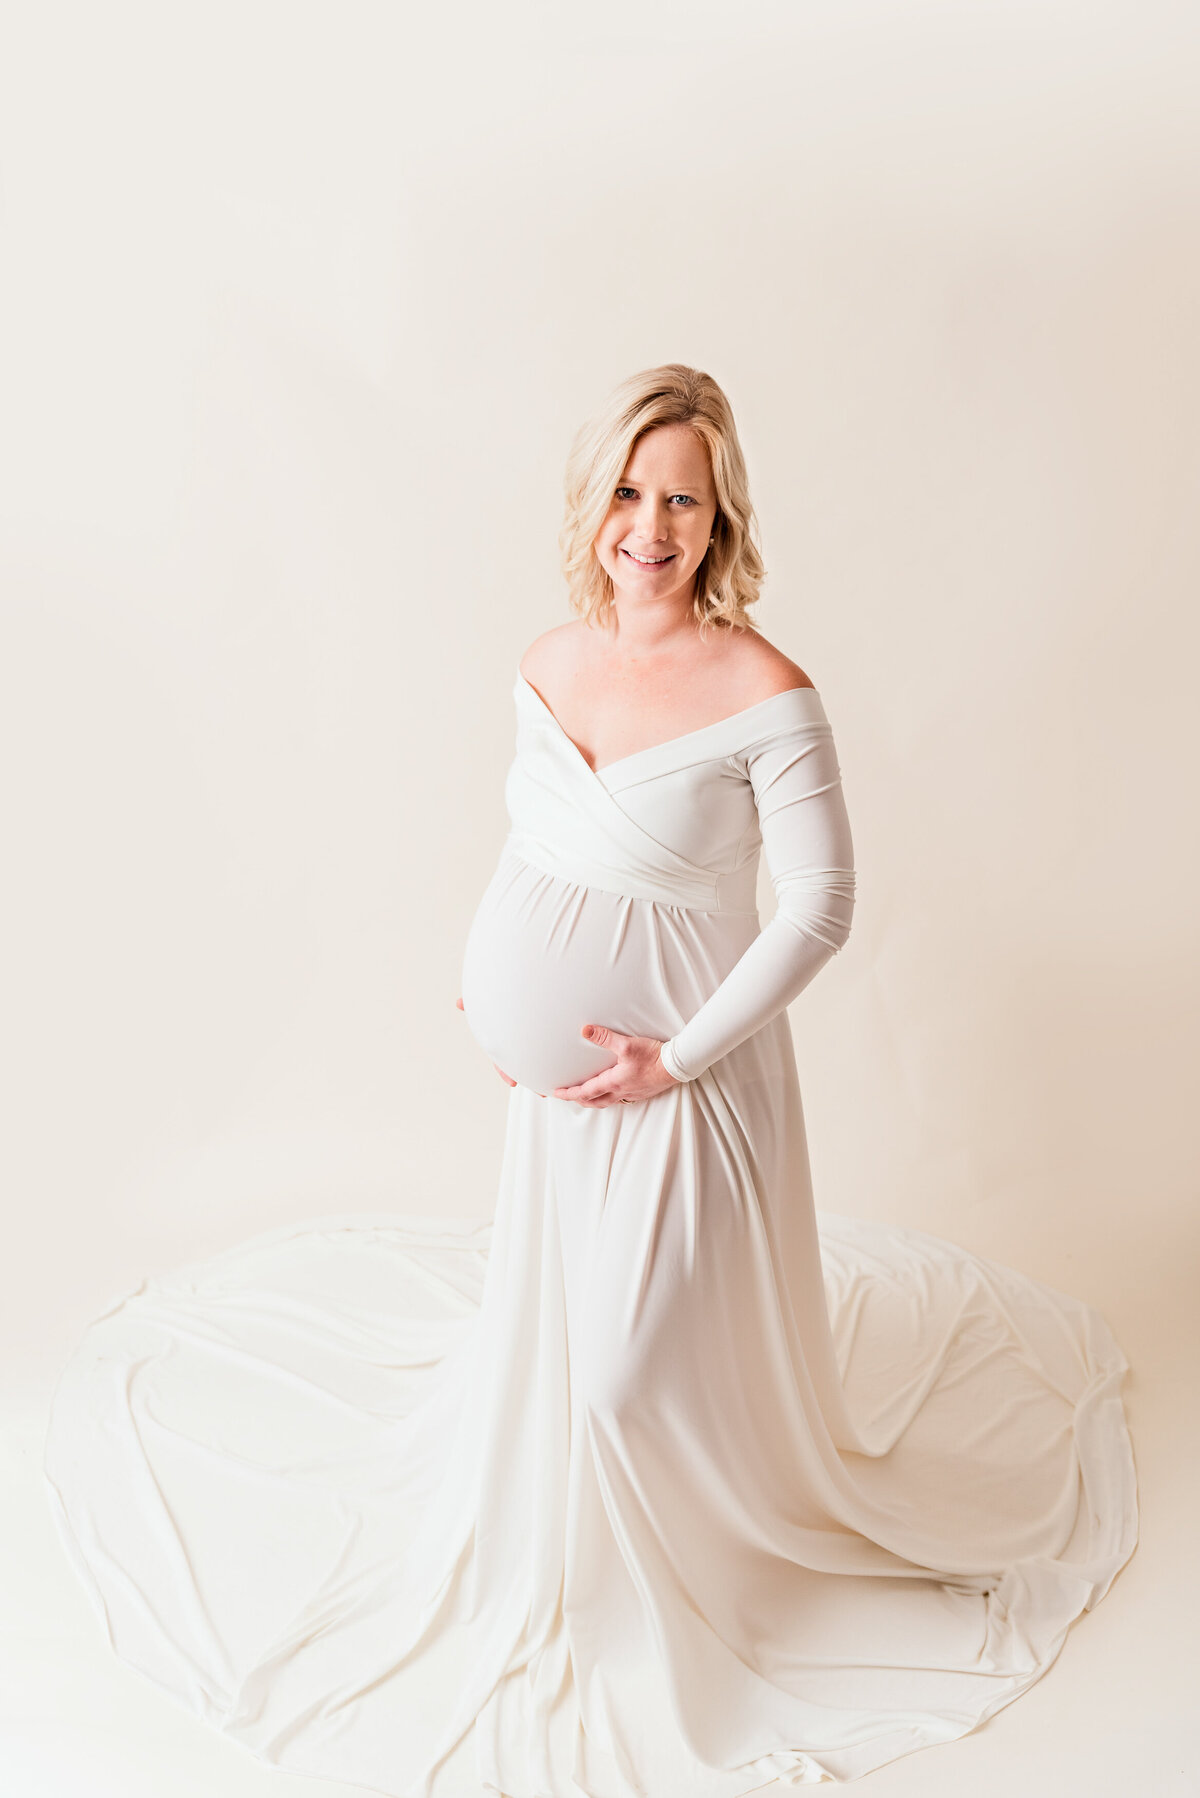 aiden-laurette-photography-maternity-photographer364